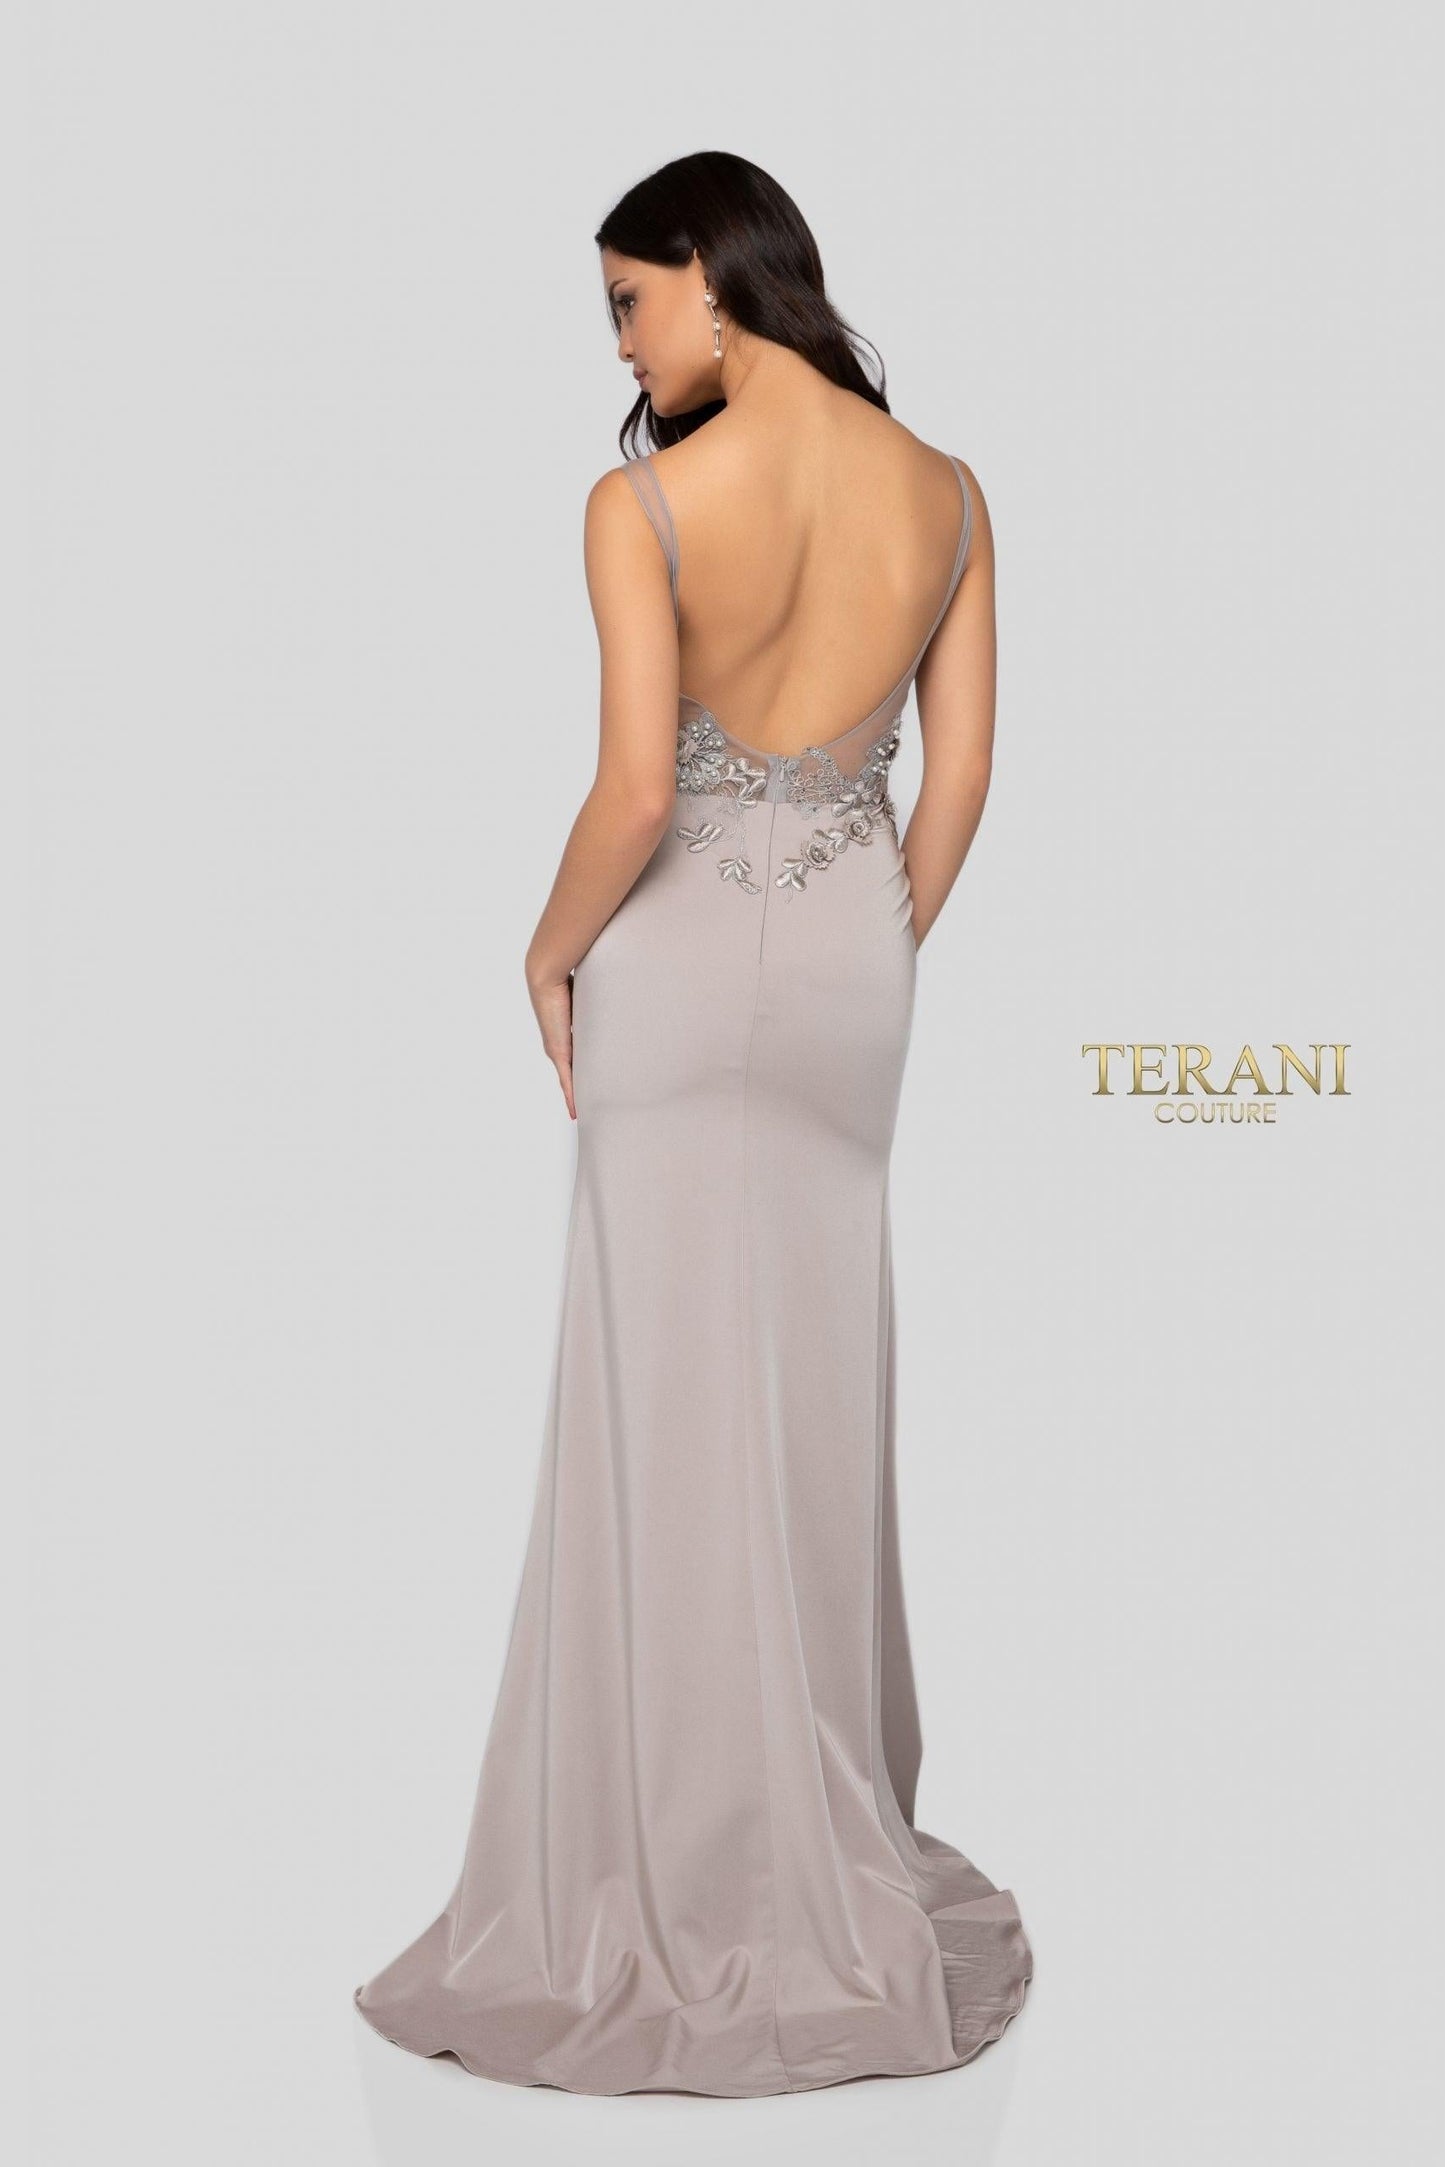 Terani Couture Sleeveless Long Prom Dress Sale 1915E9731 - The Dress Outlet